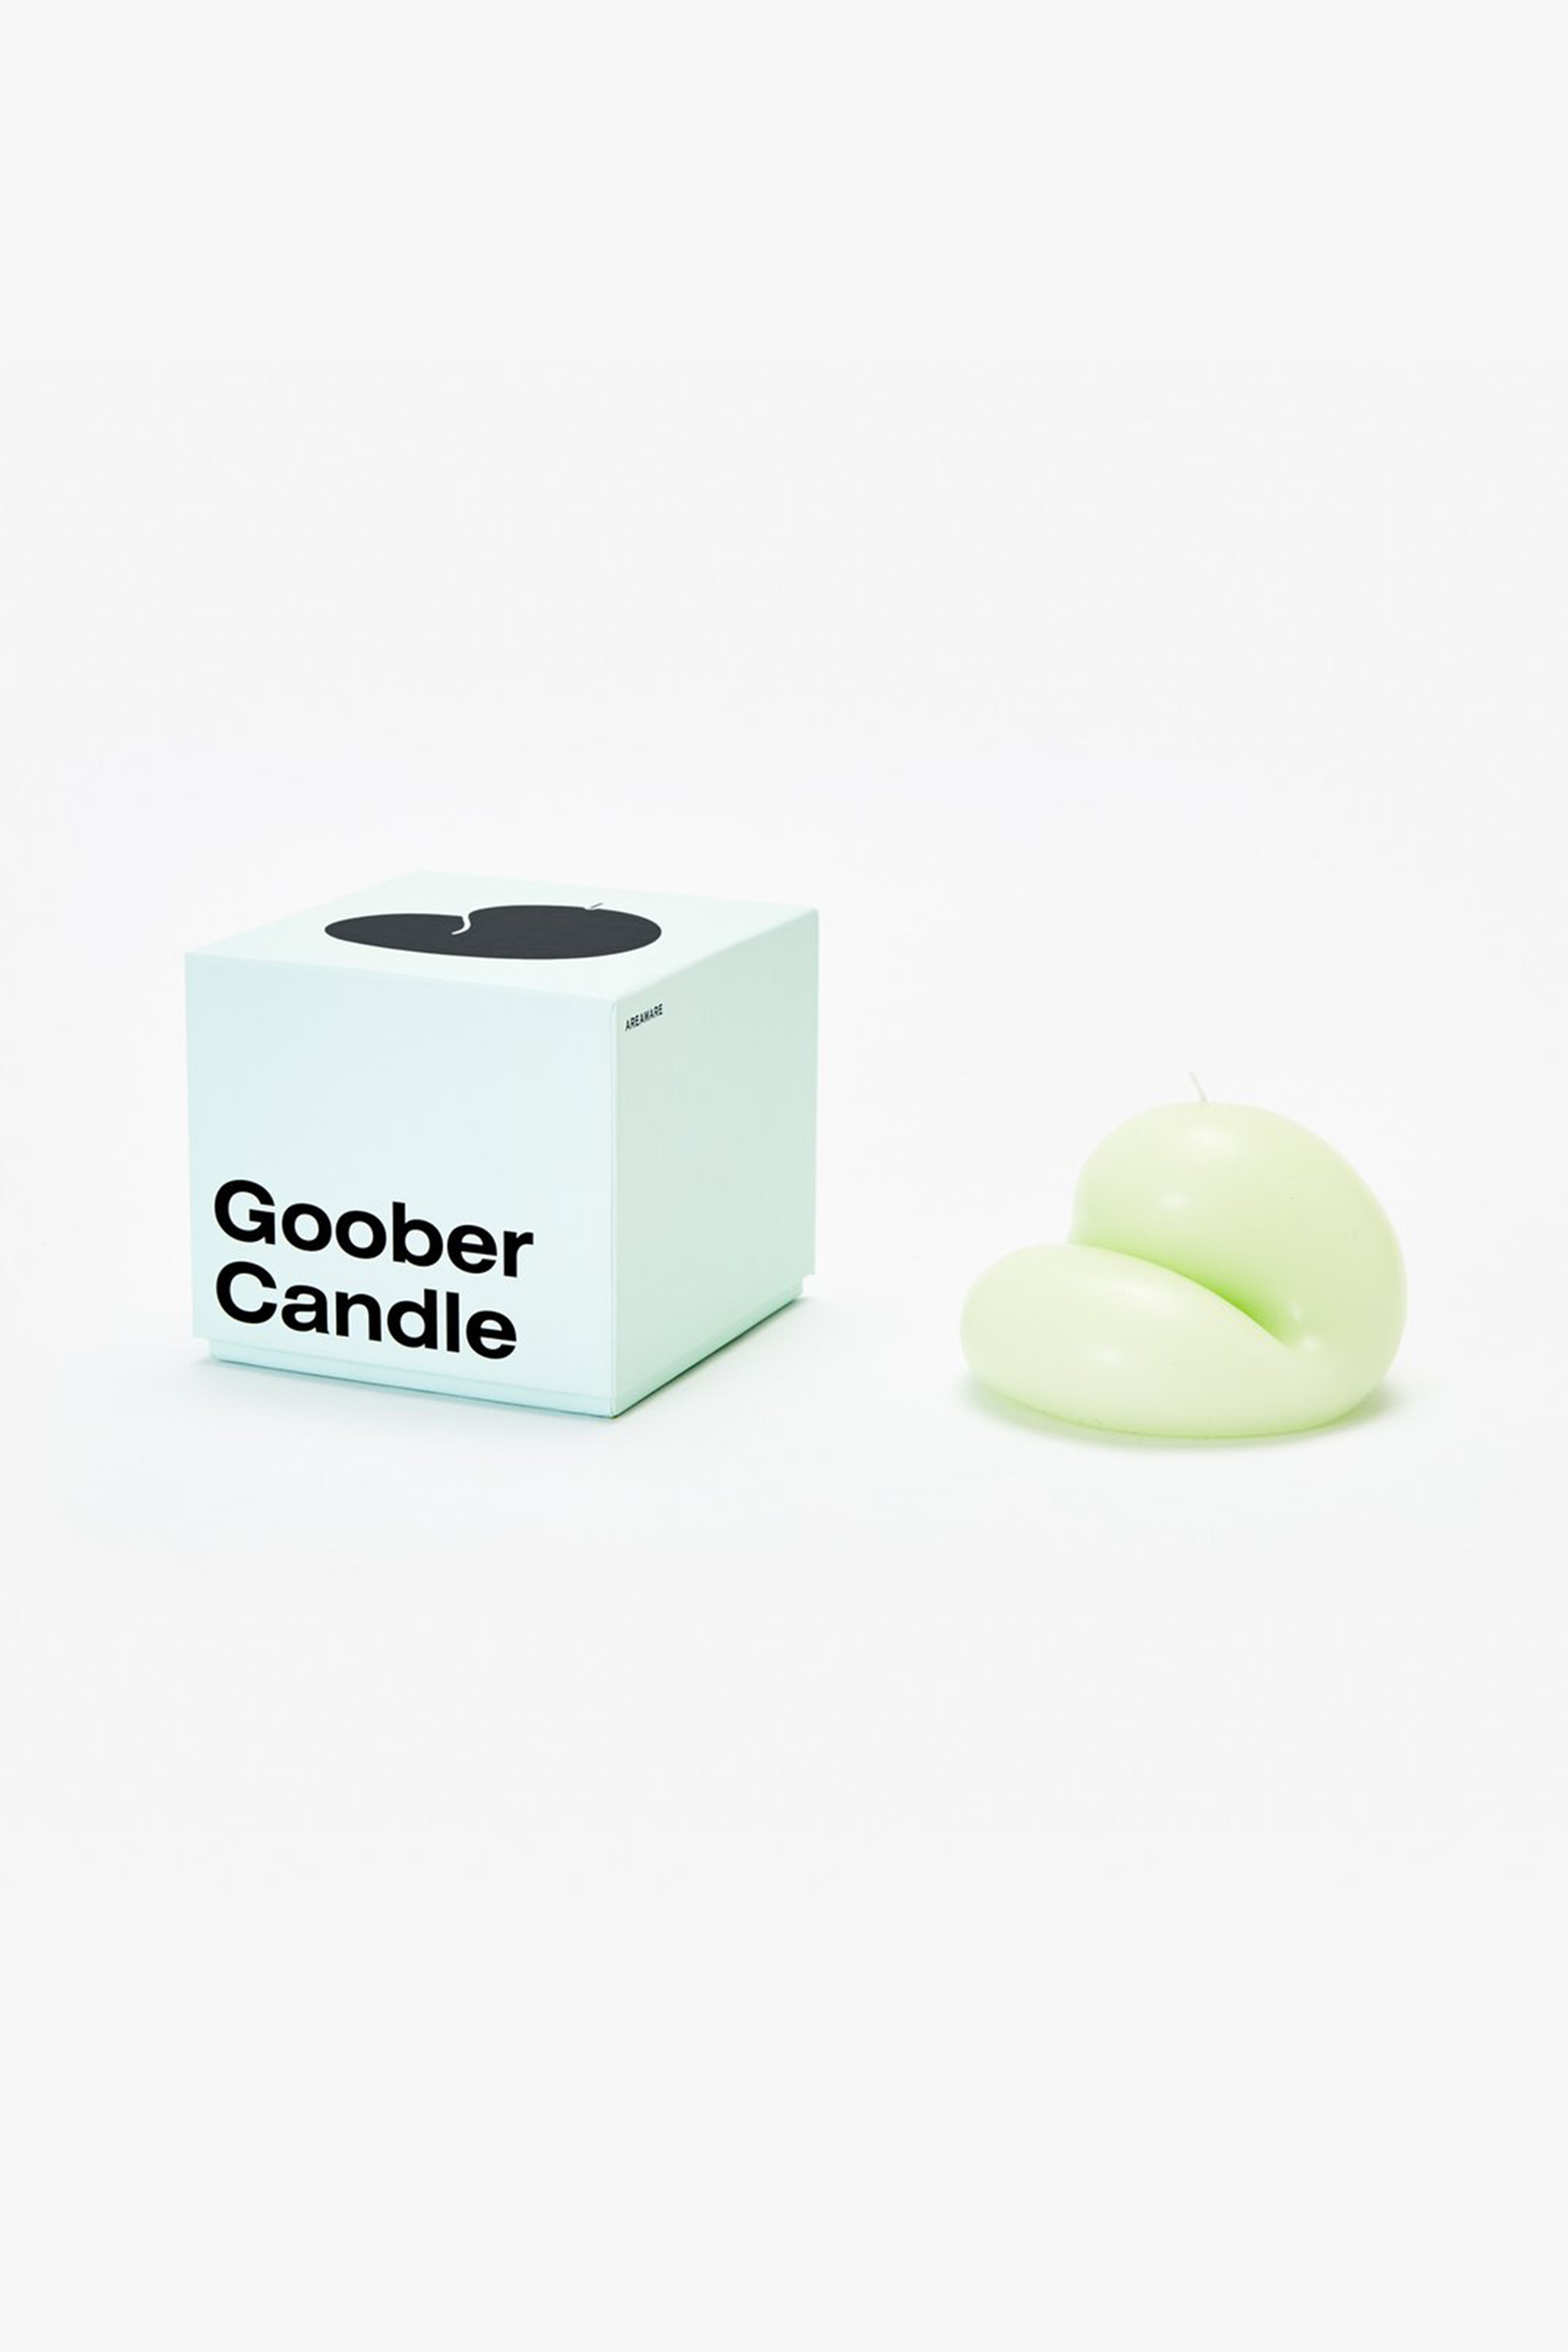 Goober Candle in Em (Green)